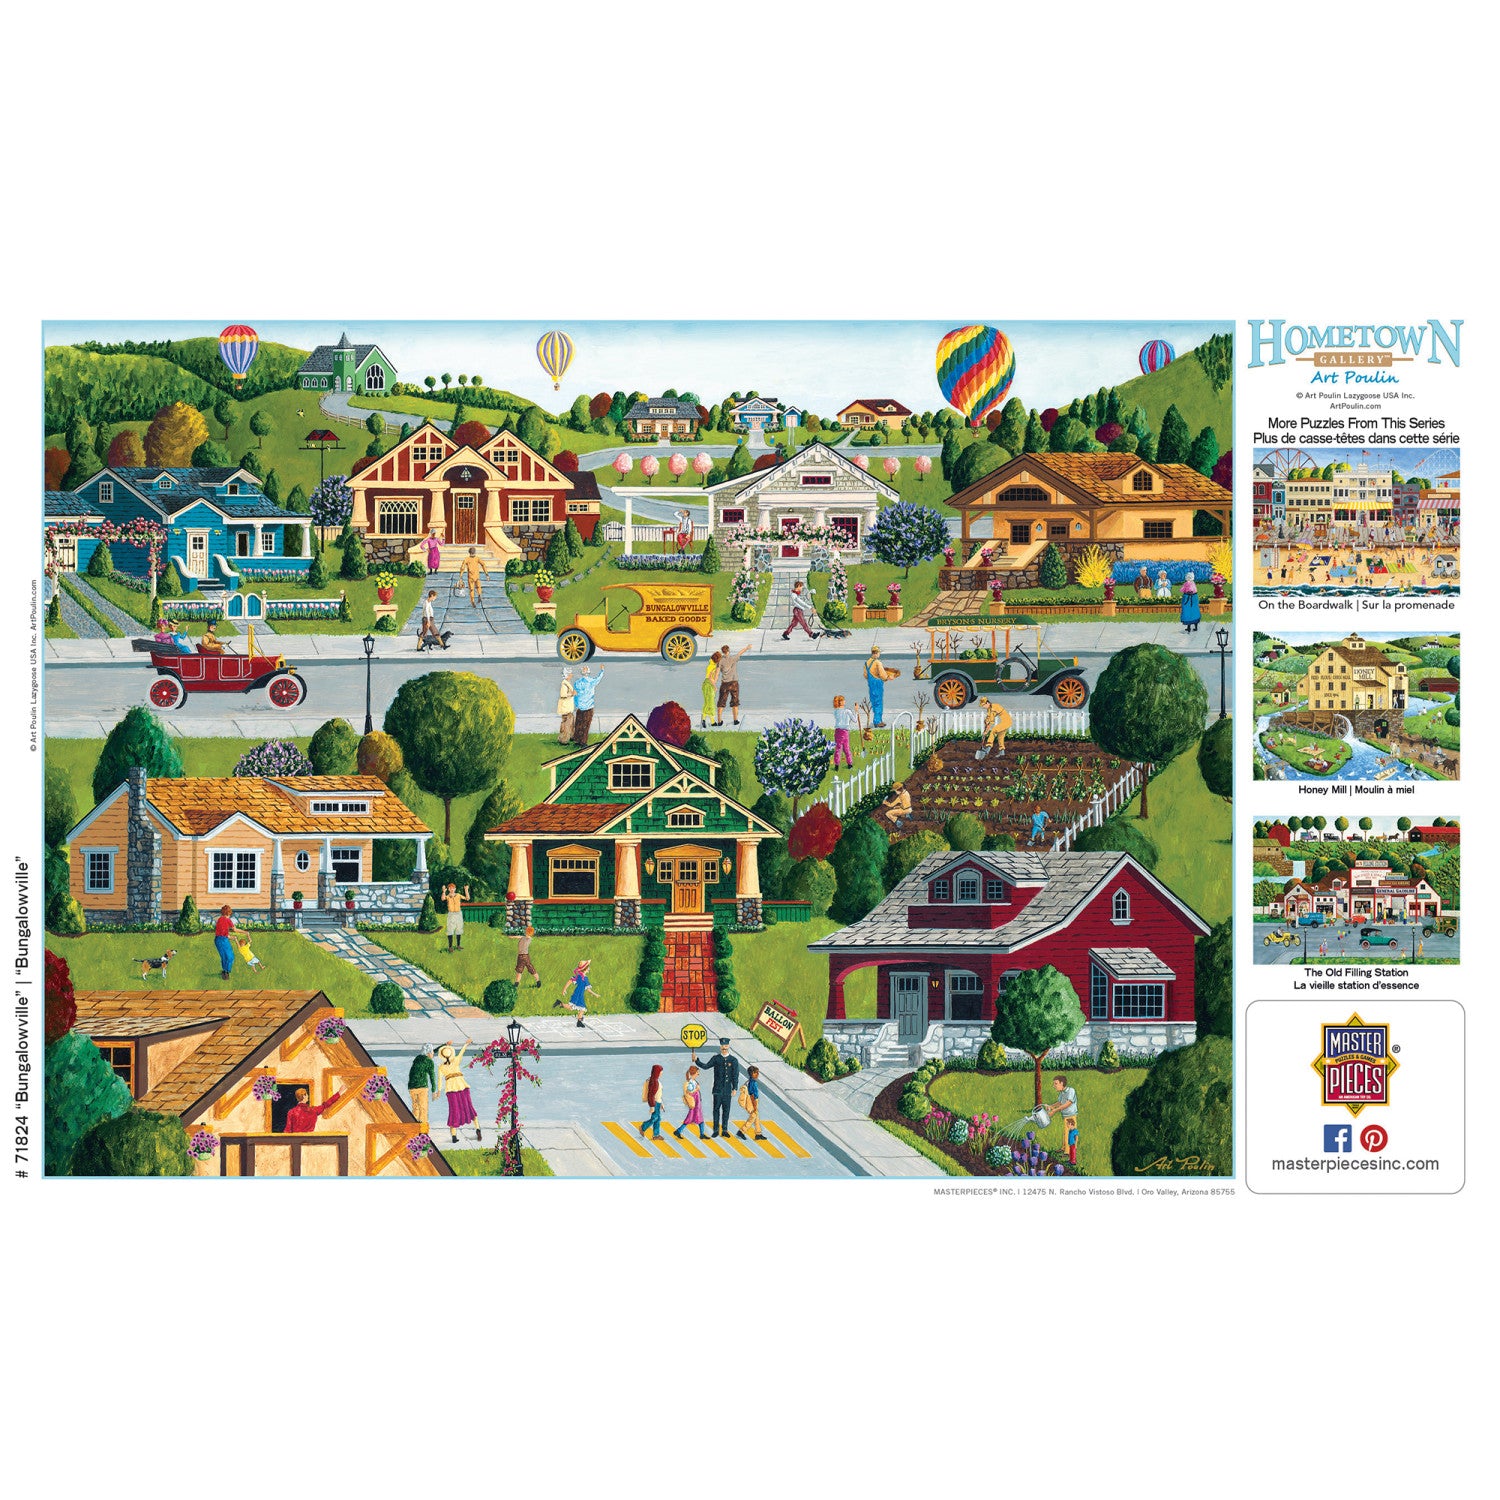 Hometown Gallery - Bungalowville 1000 Piece Puzzle By Art Poulin